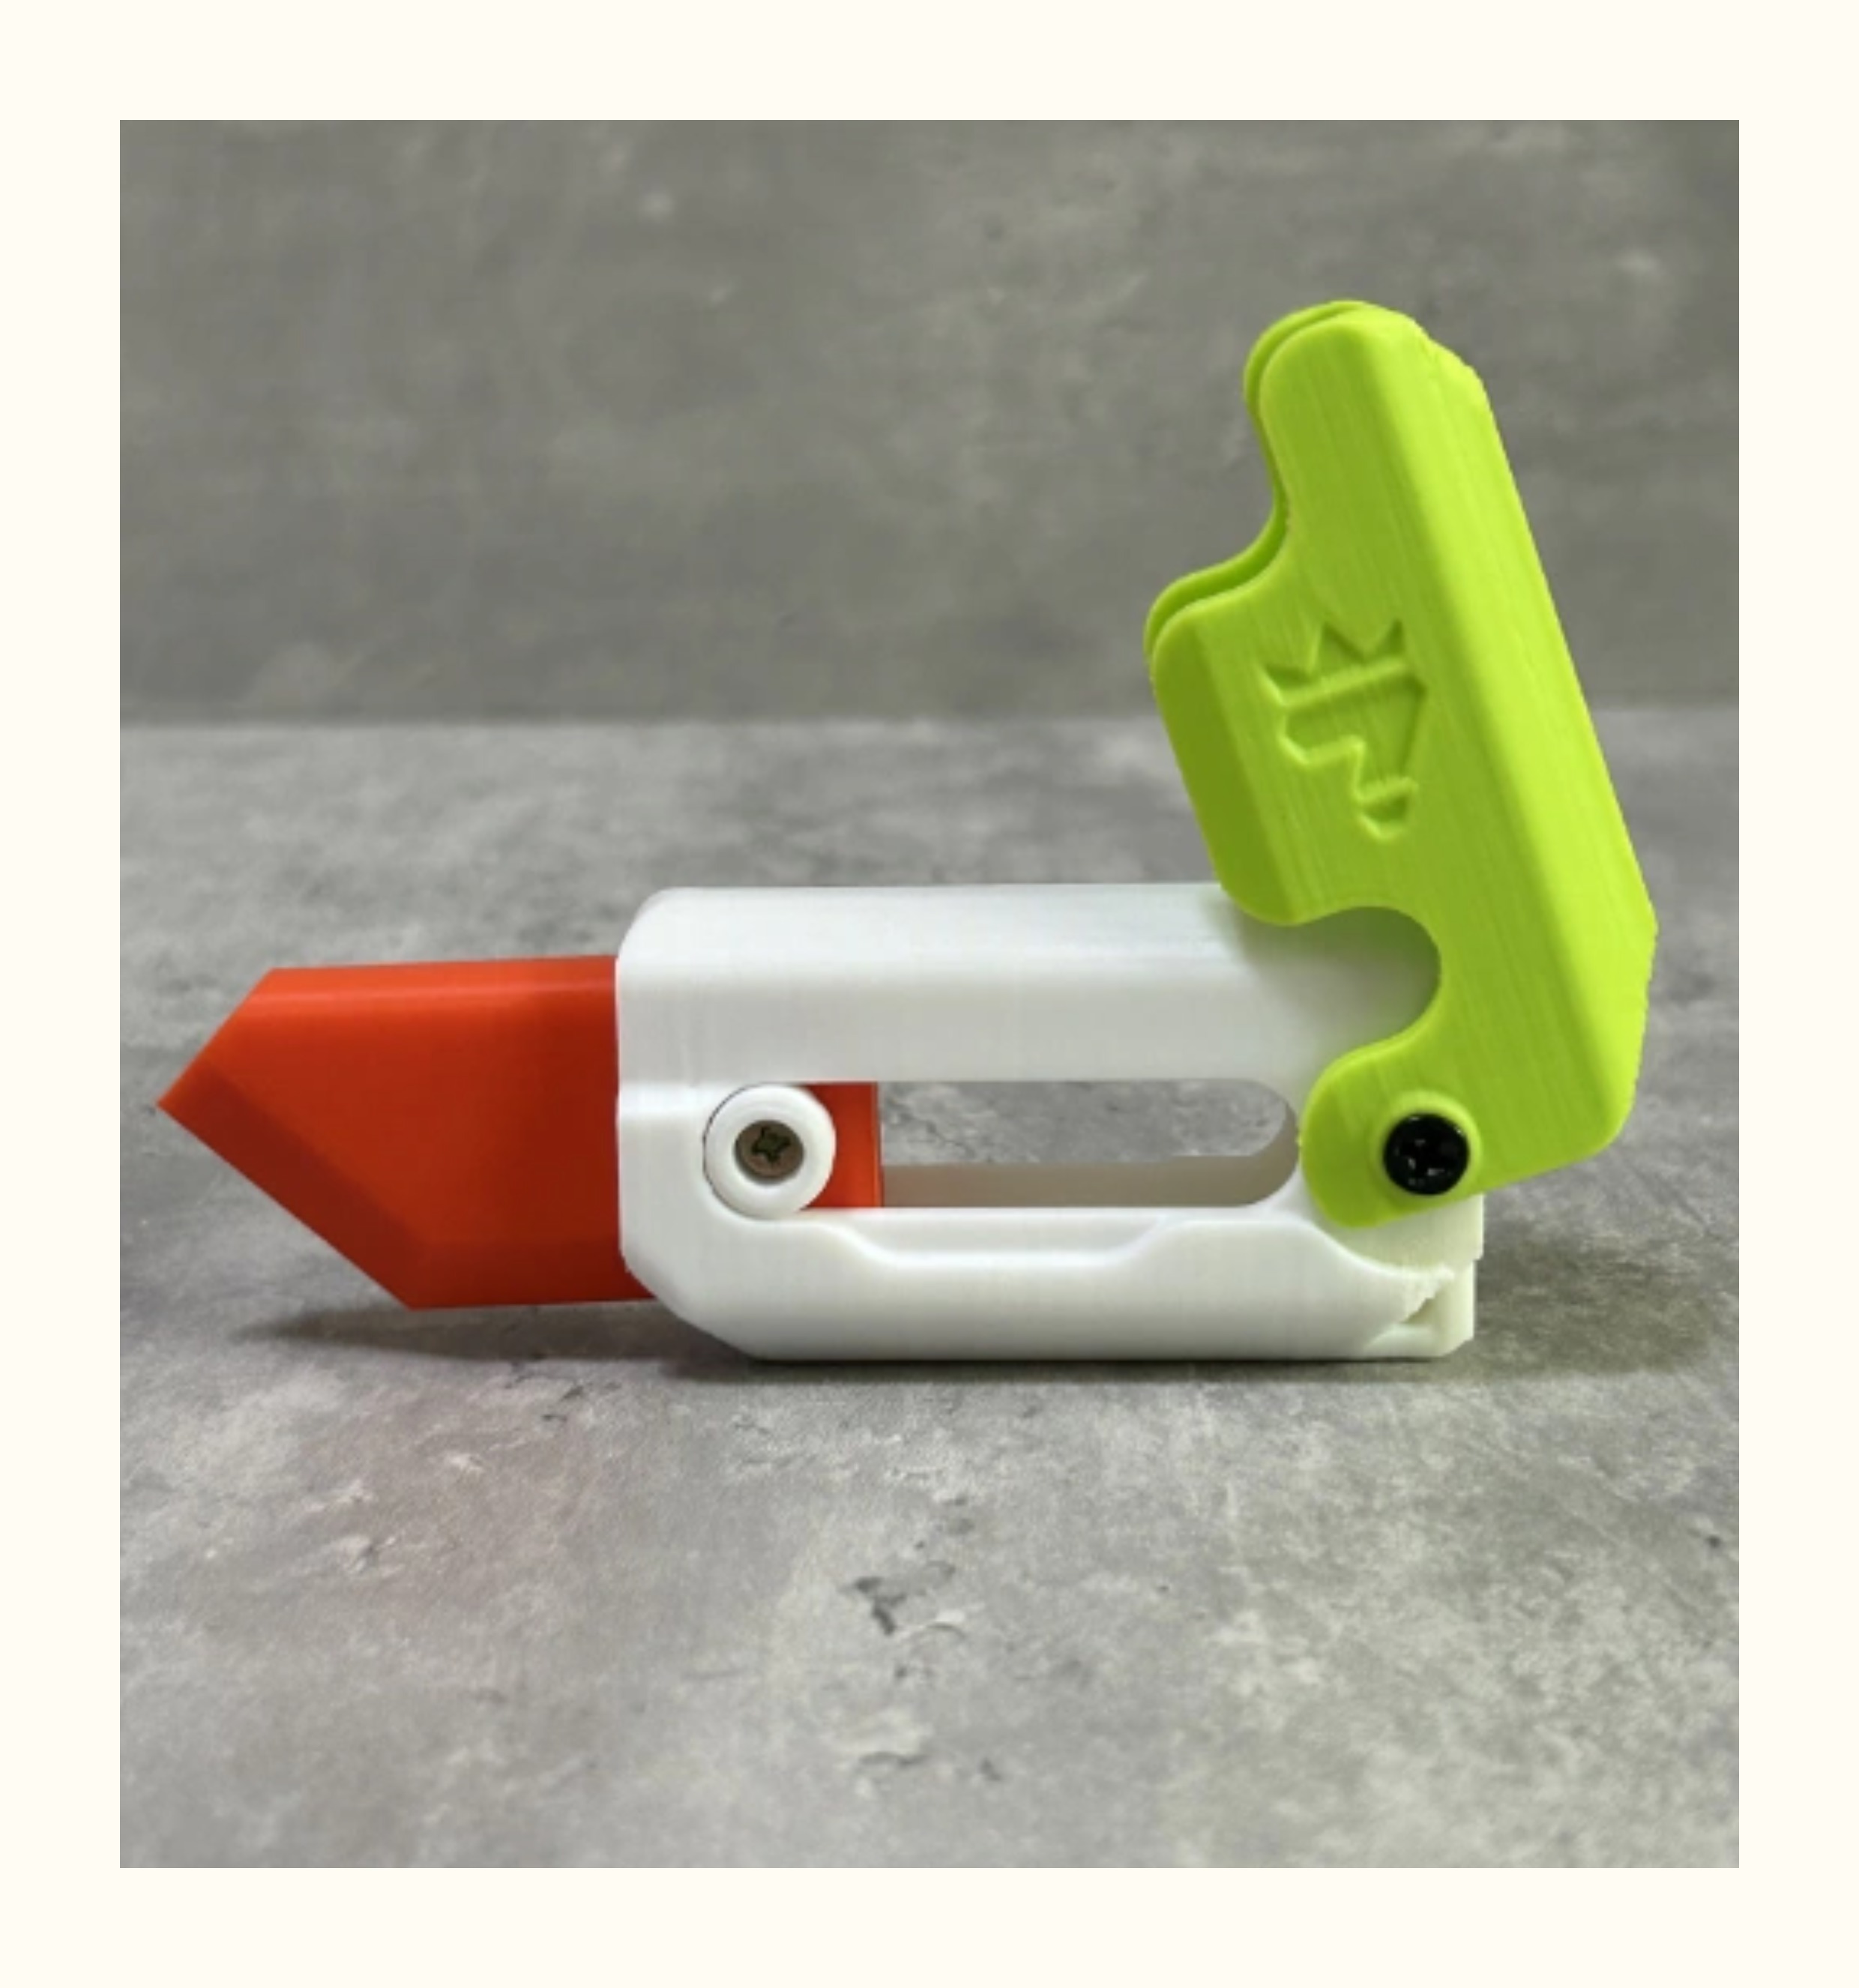 Luminous Radish Knife 3D Printing Gravity Knife Cub Jumping Small Radish  Knife Push Card Decompression Toy Mini Model Pendant